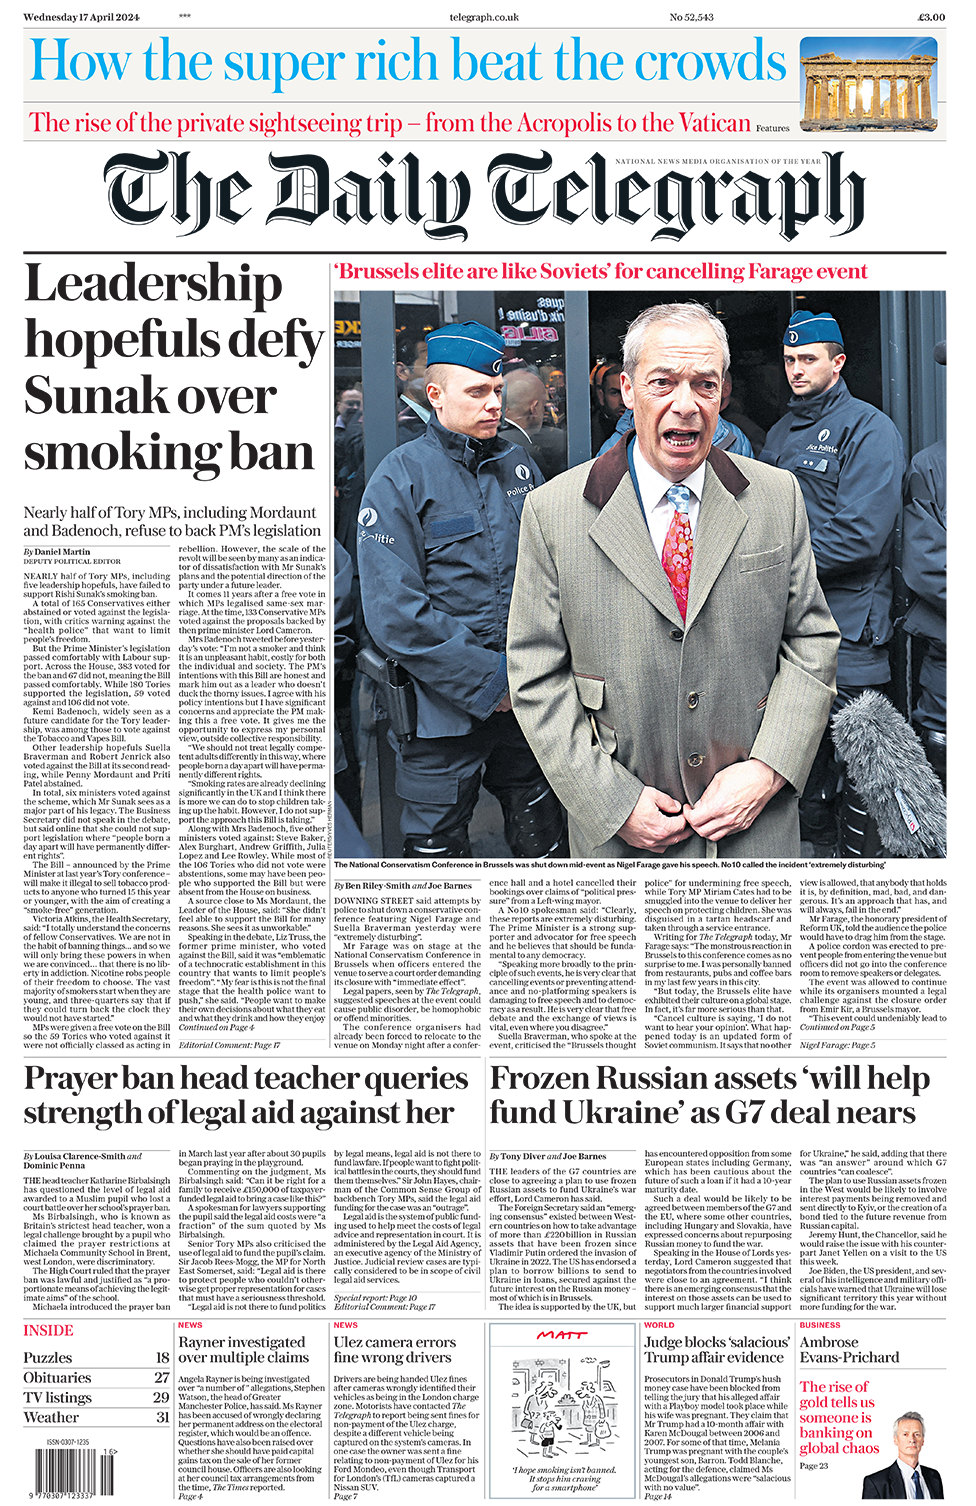 The headline in the Telegraph reads: "Leadership hopefuls defy Sunak over smoking ban".